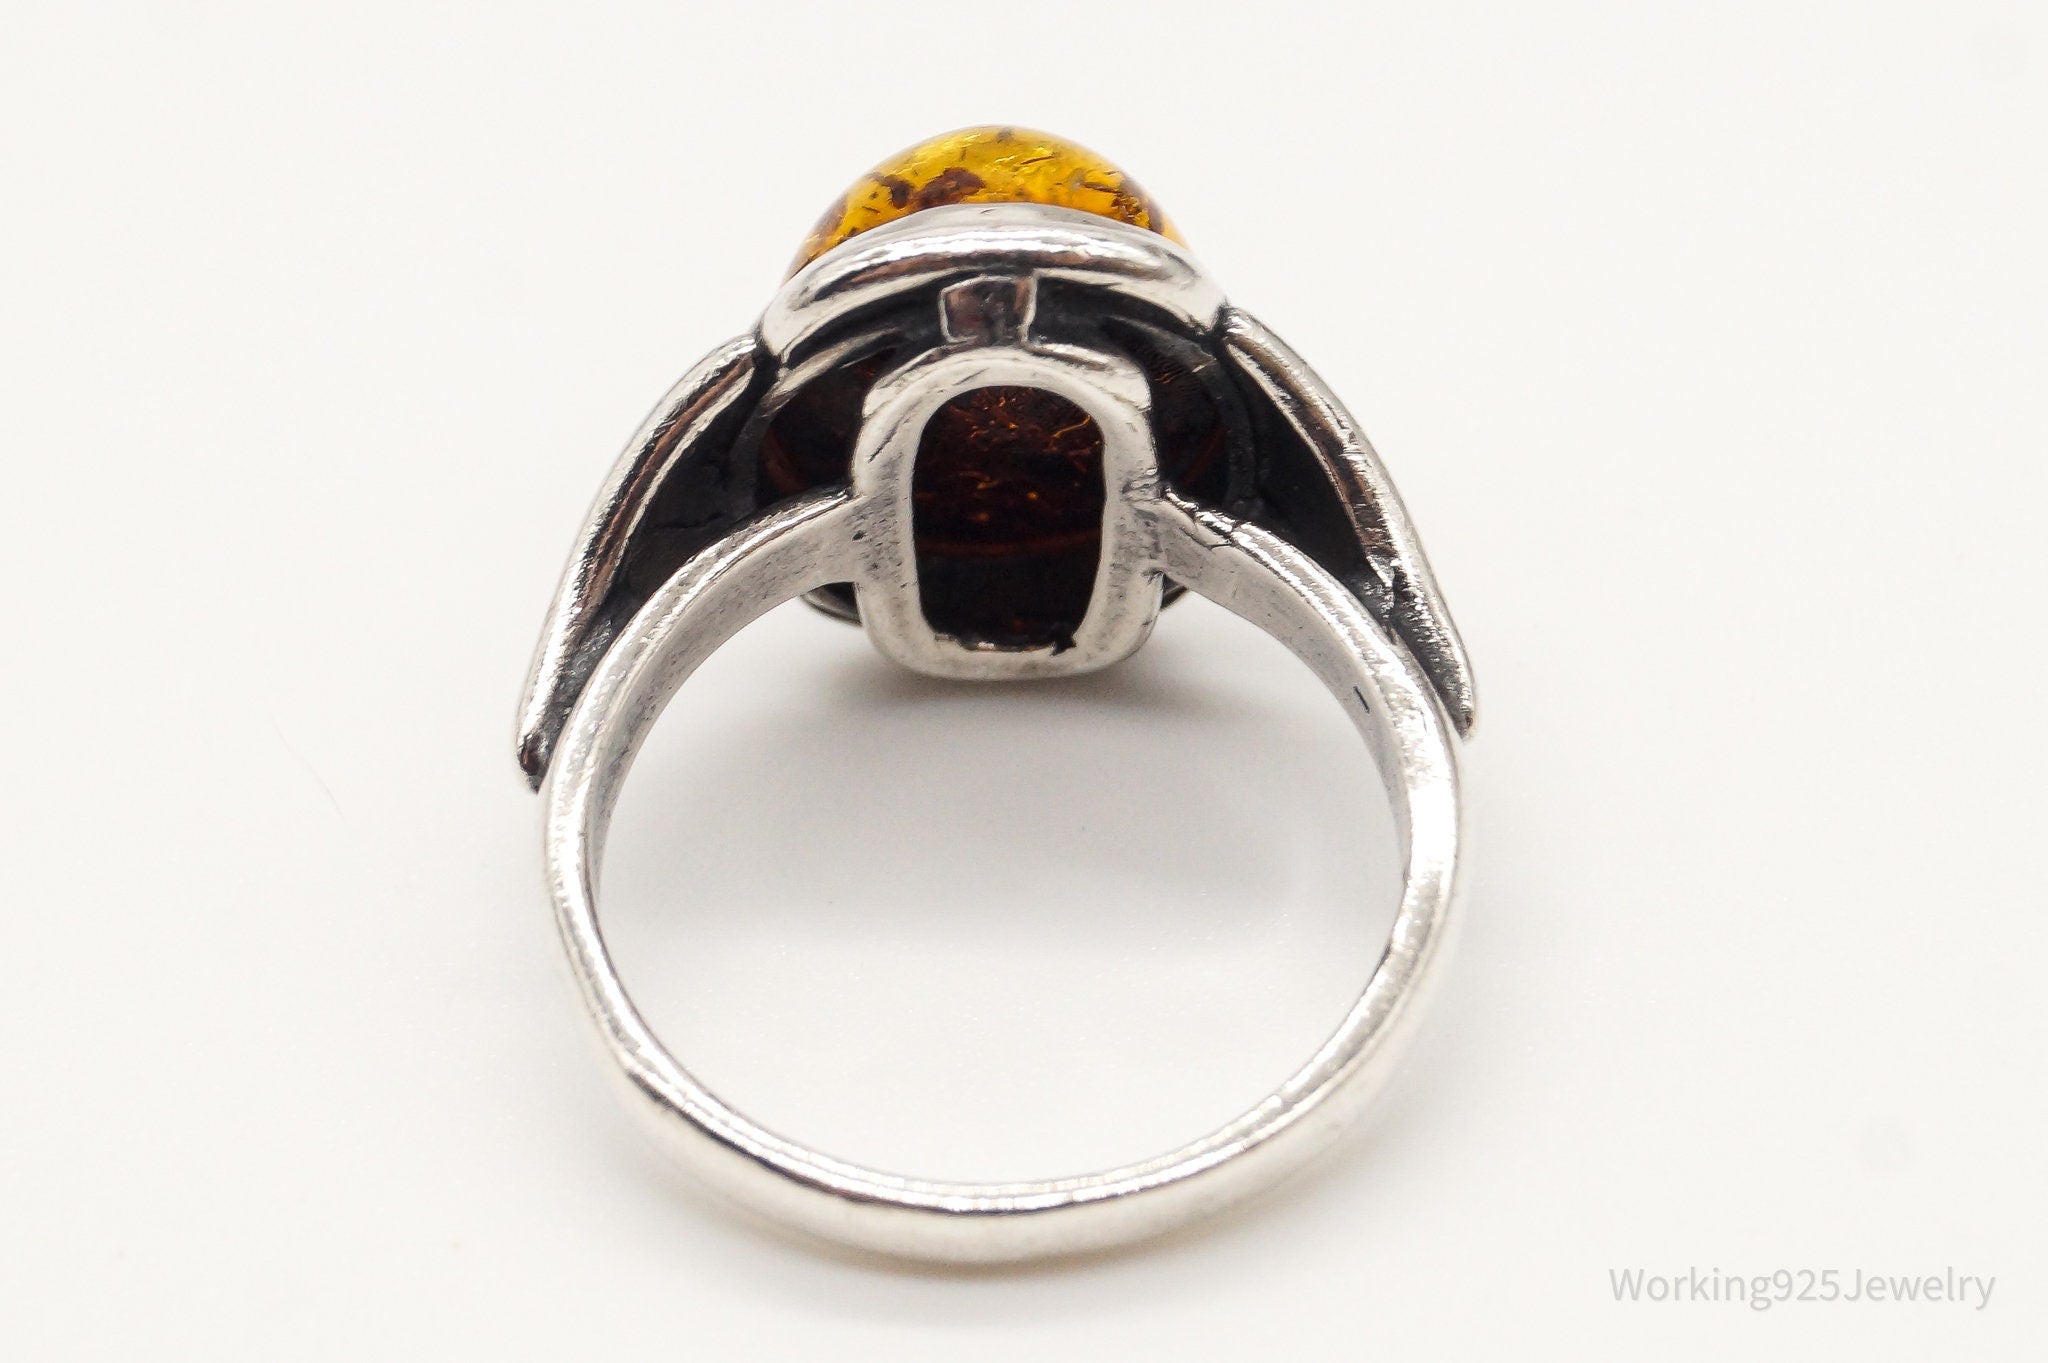 Vintage Amber Sterling Silver Ring - Size 6